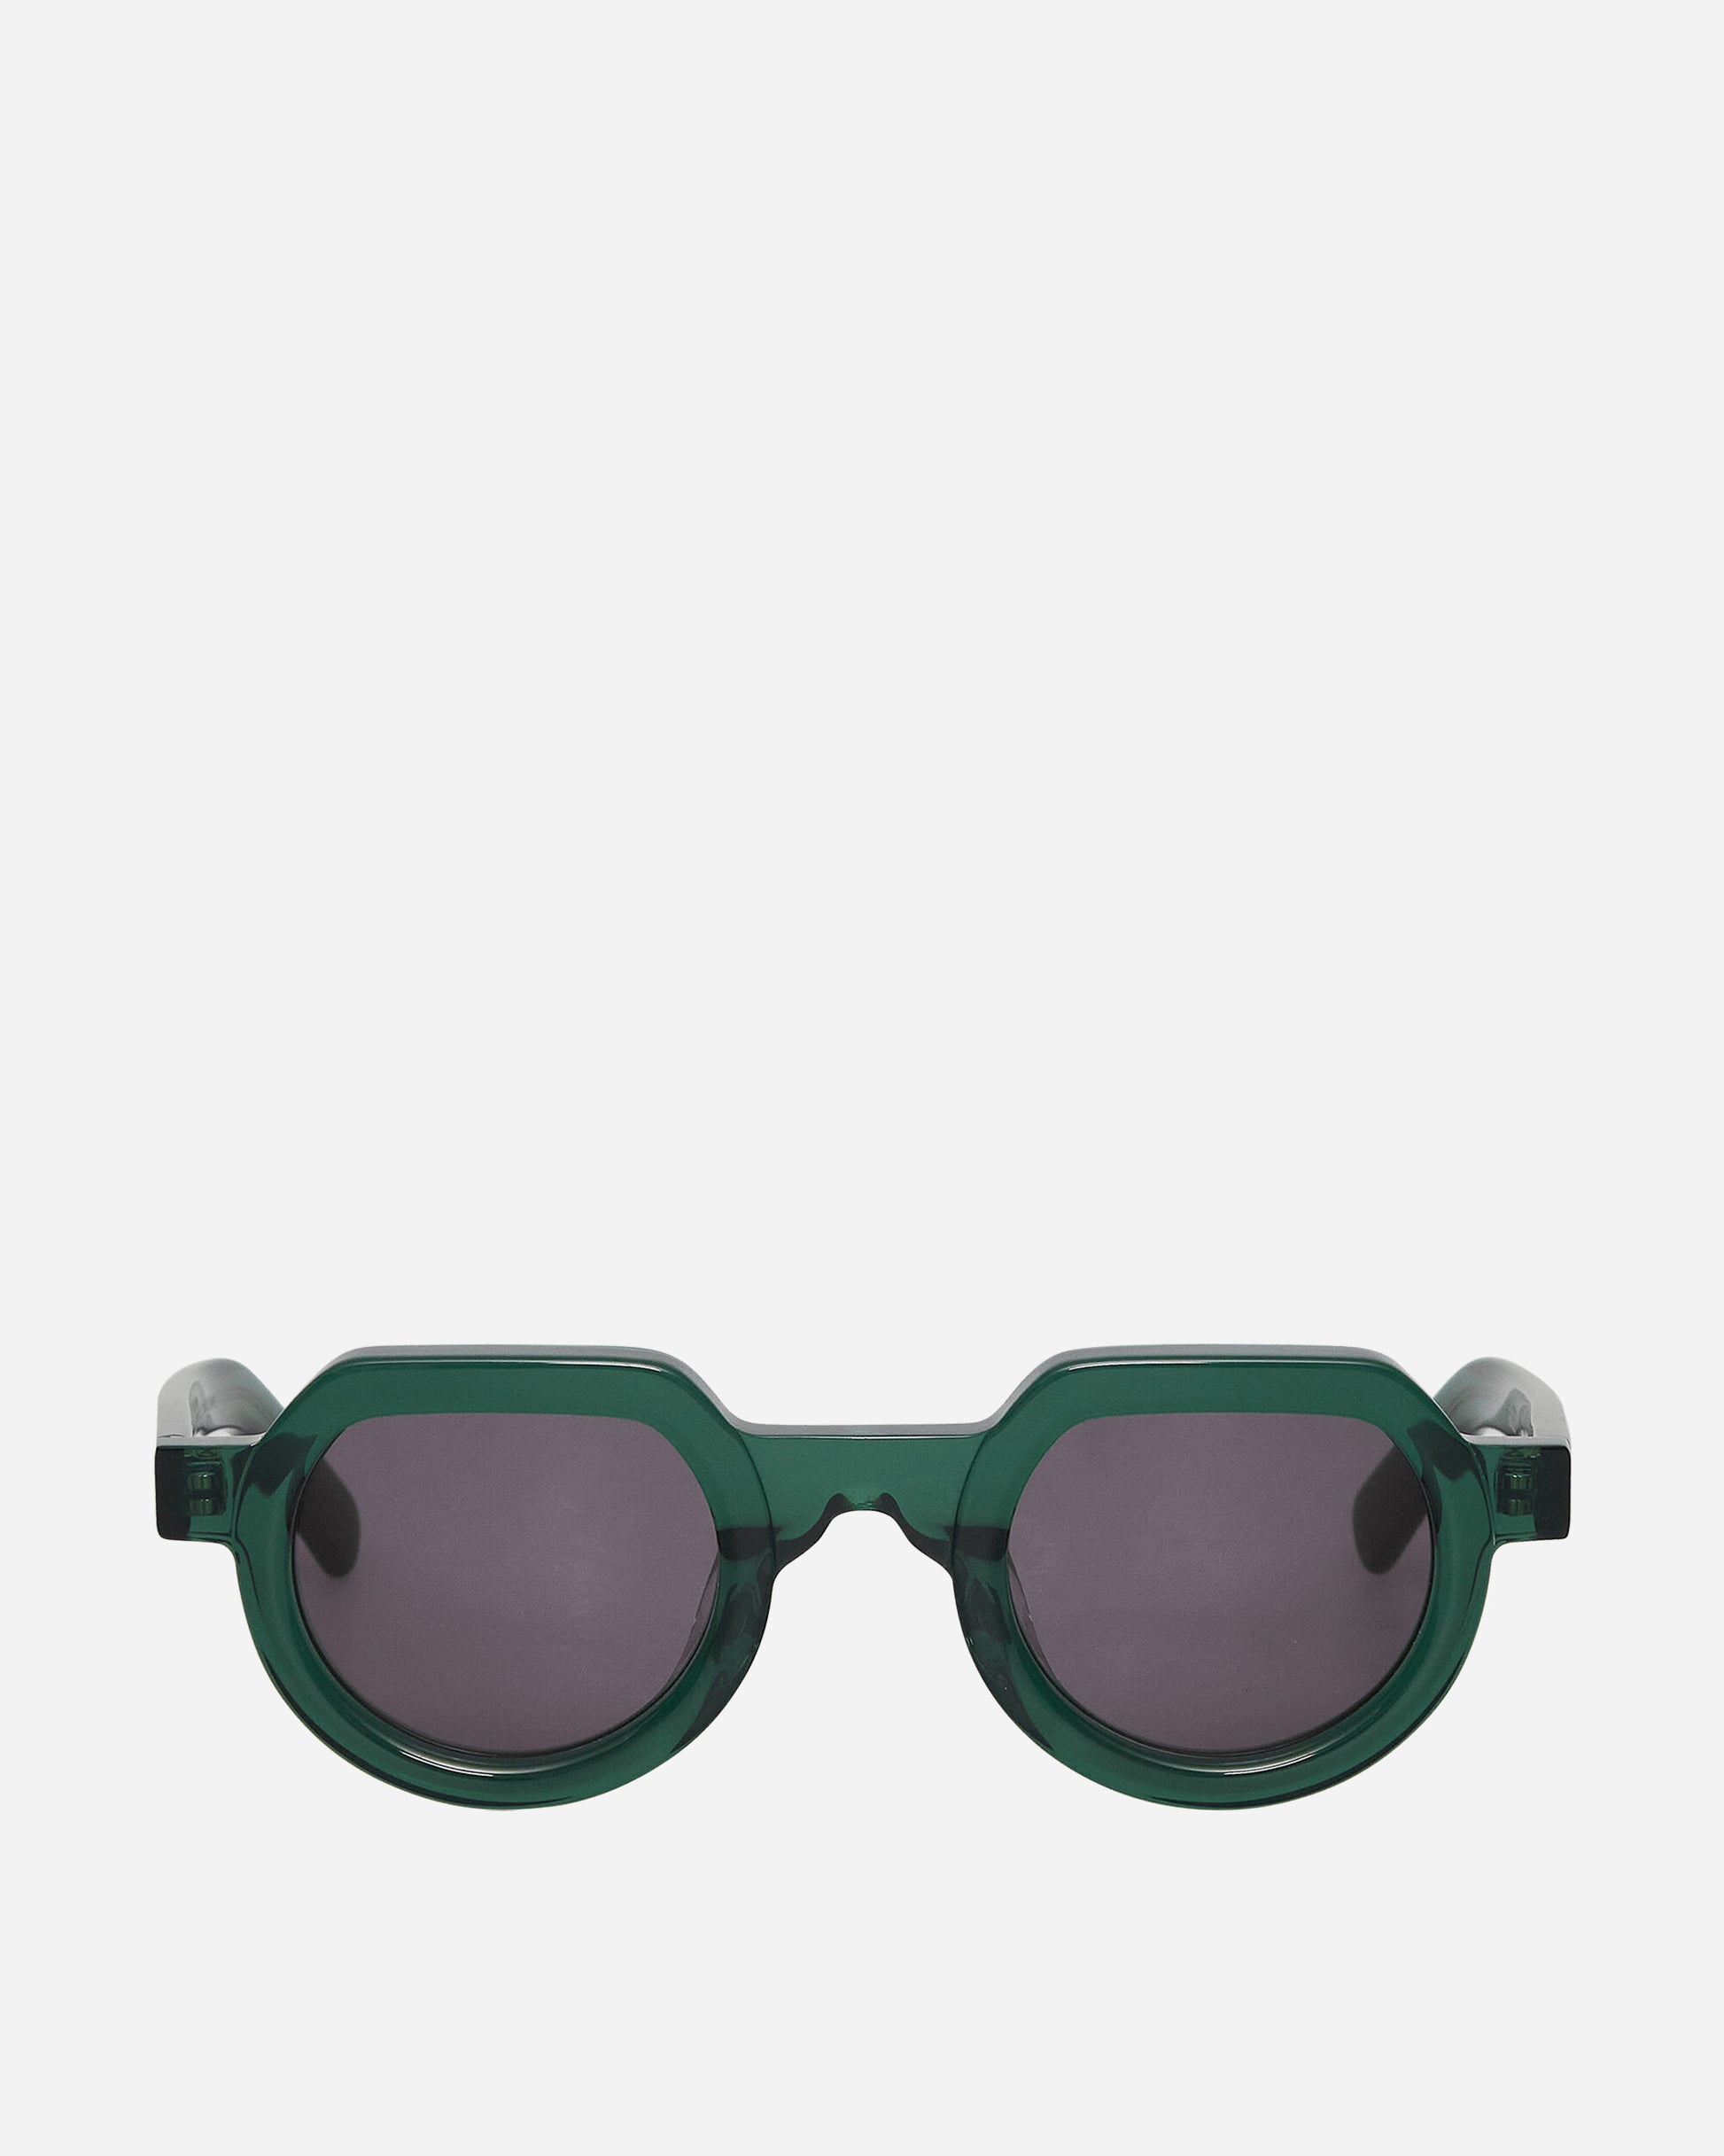 Brain Dead Tani Eye Protection - Green Glitter Jade Gltter/Black Lens Eyewear Sunglasses A08003675GR GRBL